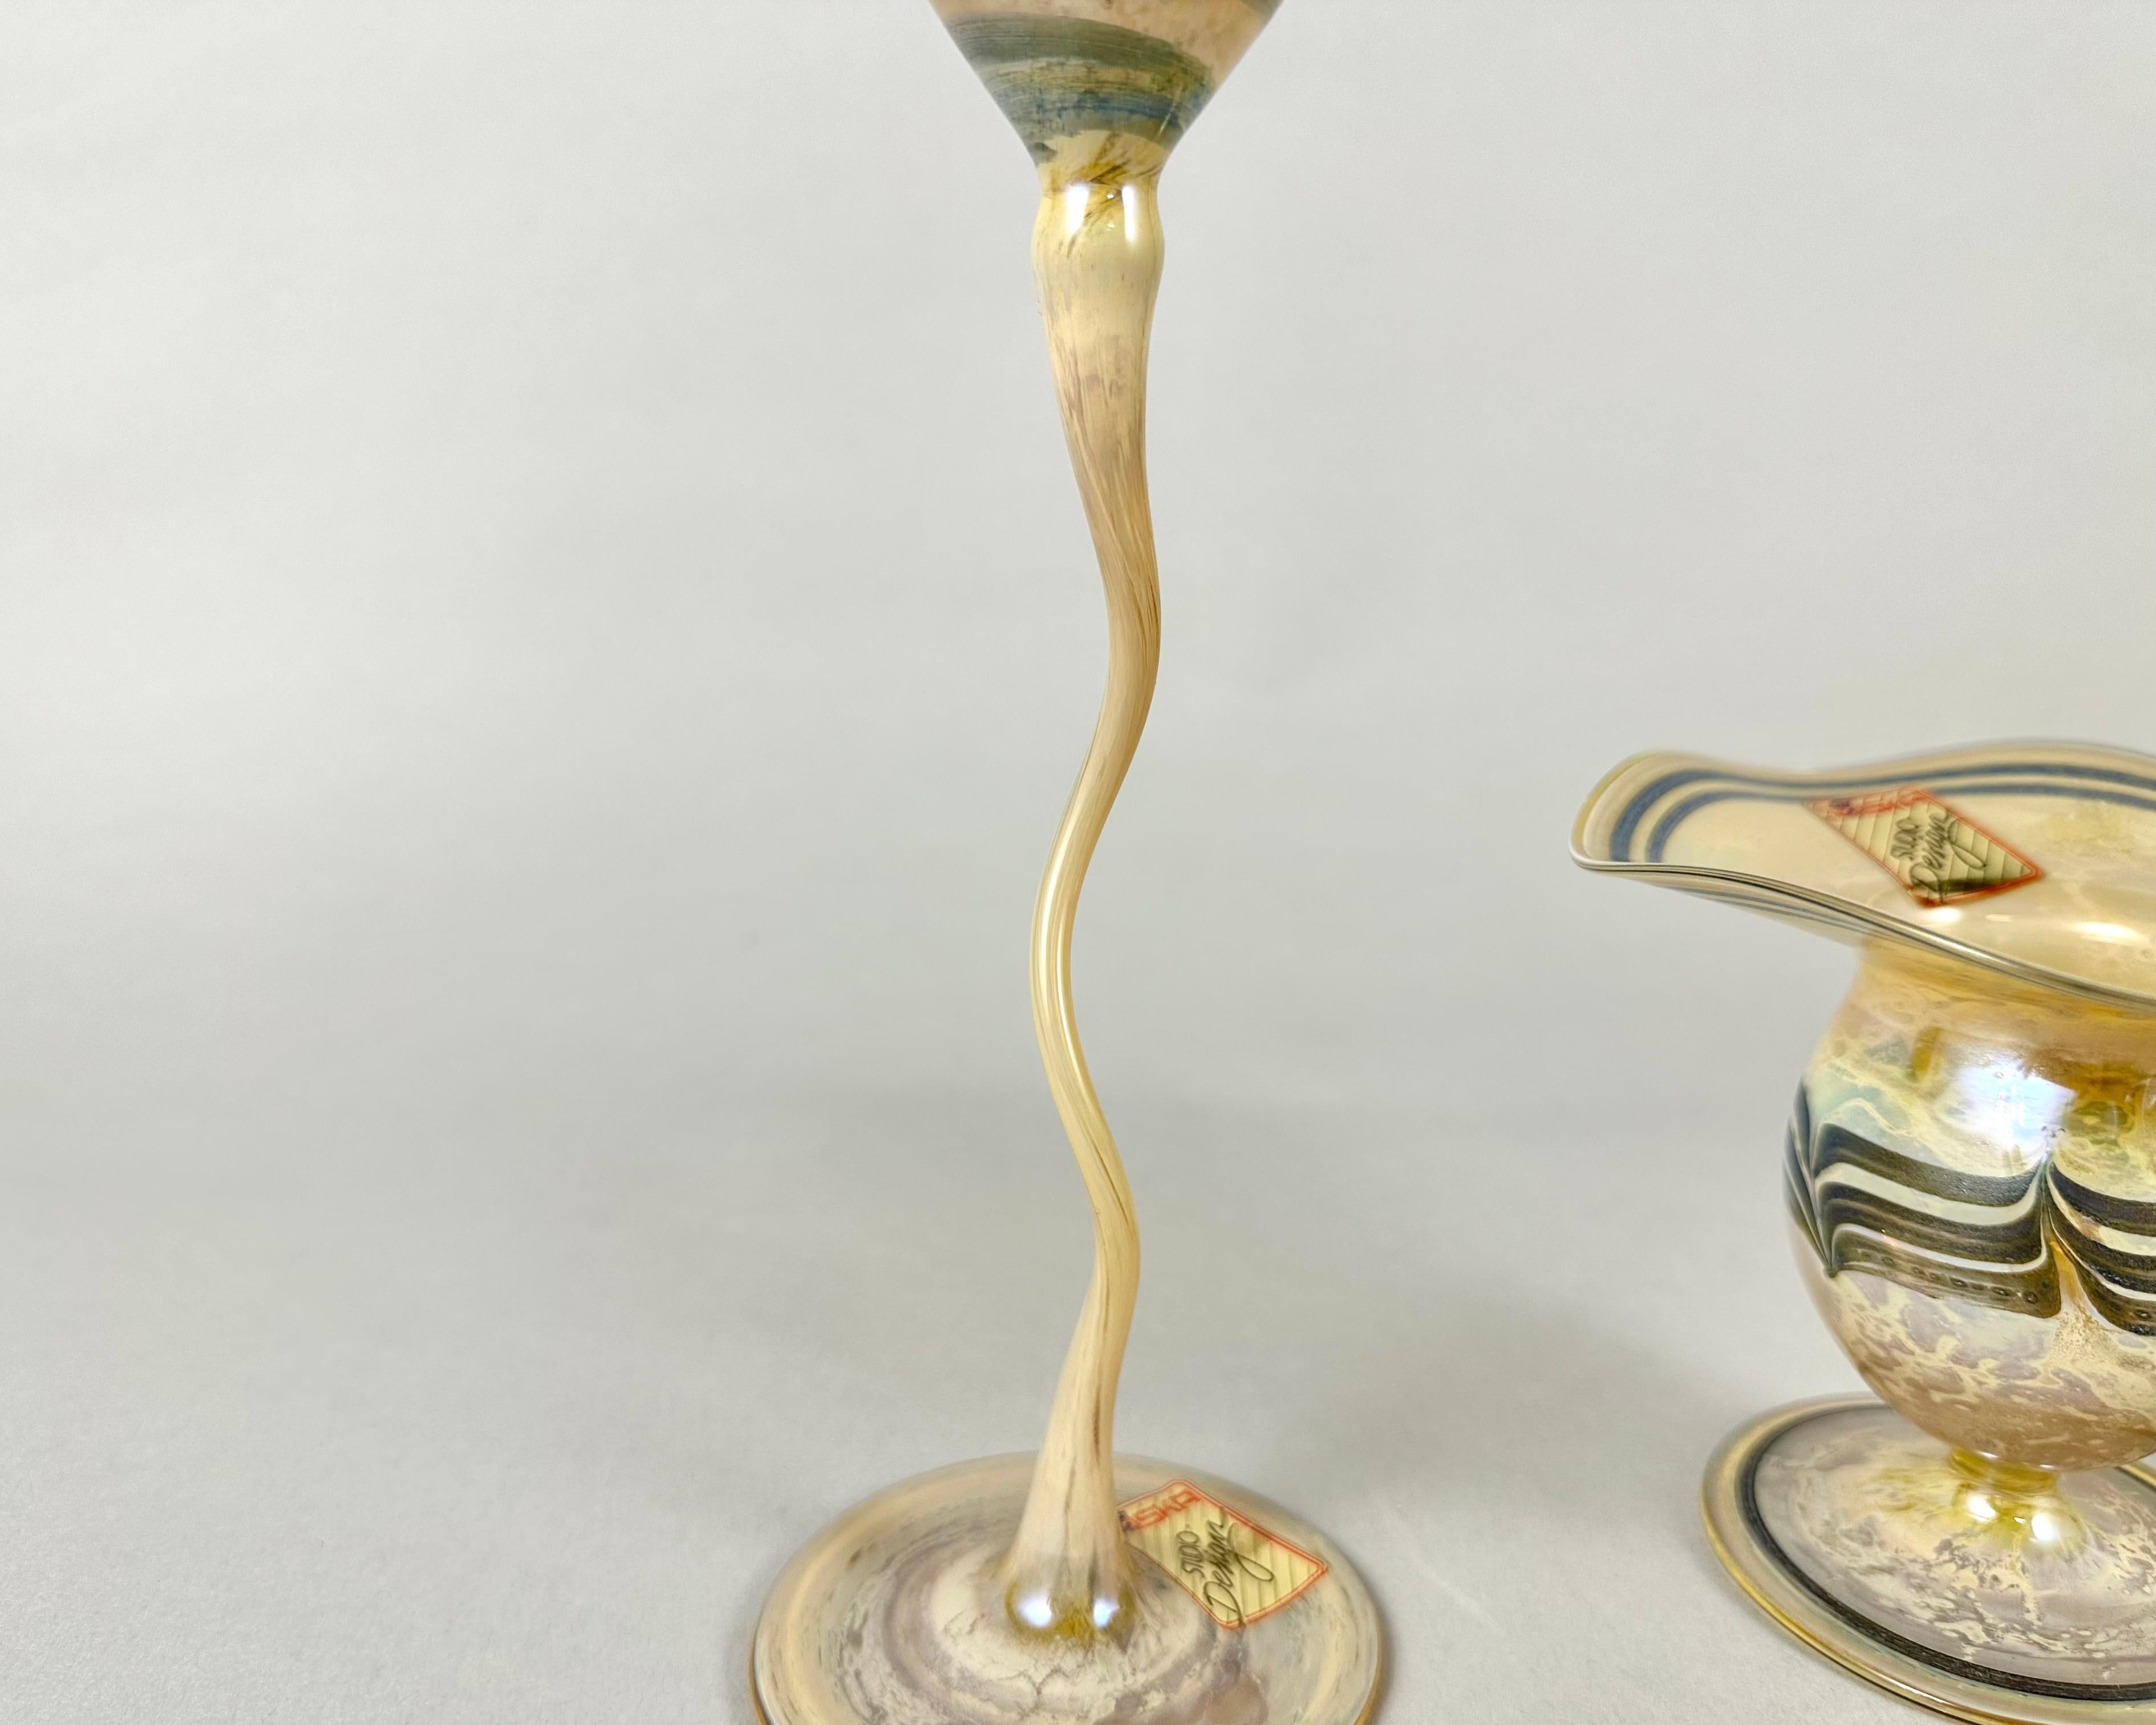 German Delightful Murano Glass Vases Joska Studio Design Mid-Century Modern Set 2 For Sale